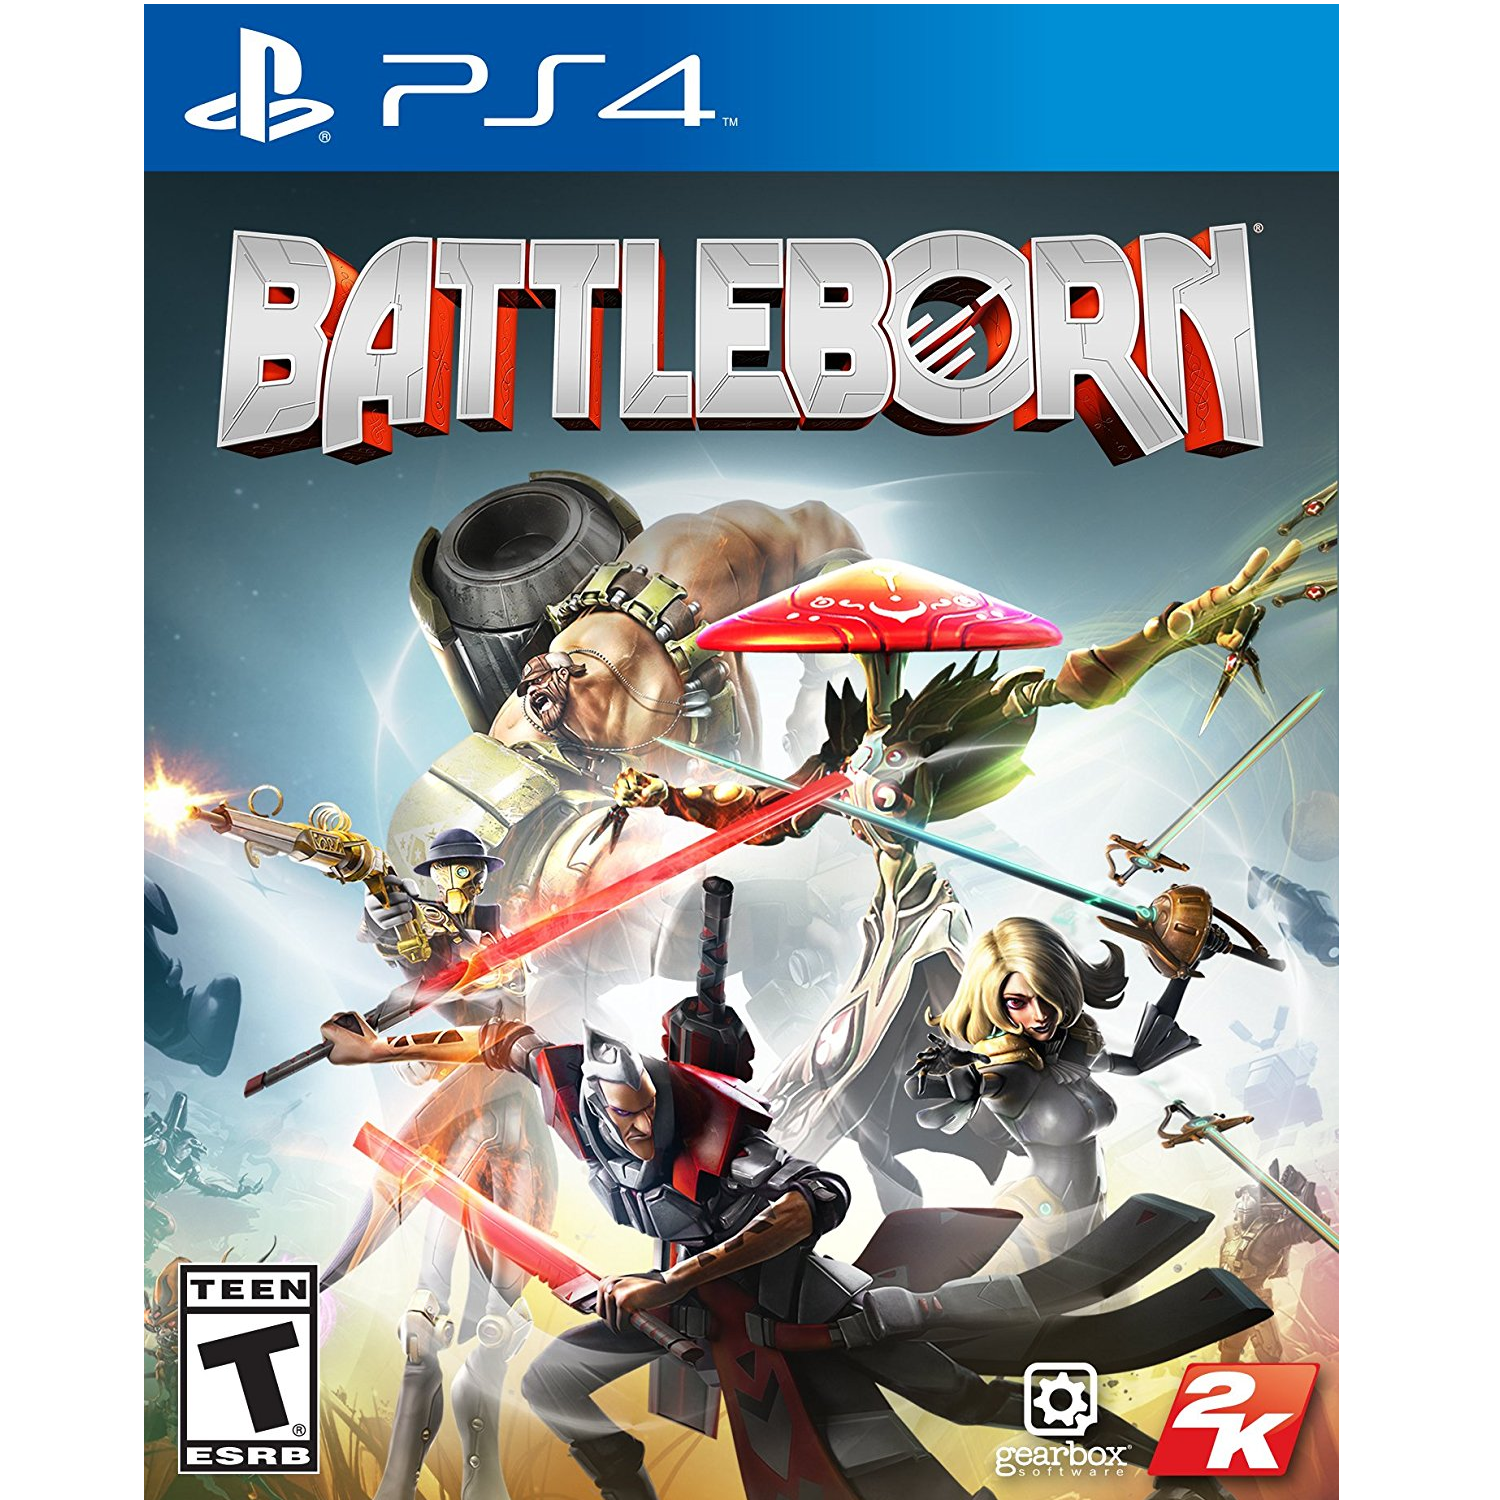 Battleborn Video Game (PS4 & Xbox One) Just $9.99! (Reg $39.99)